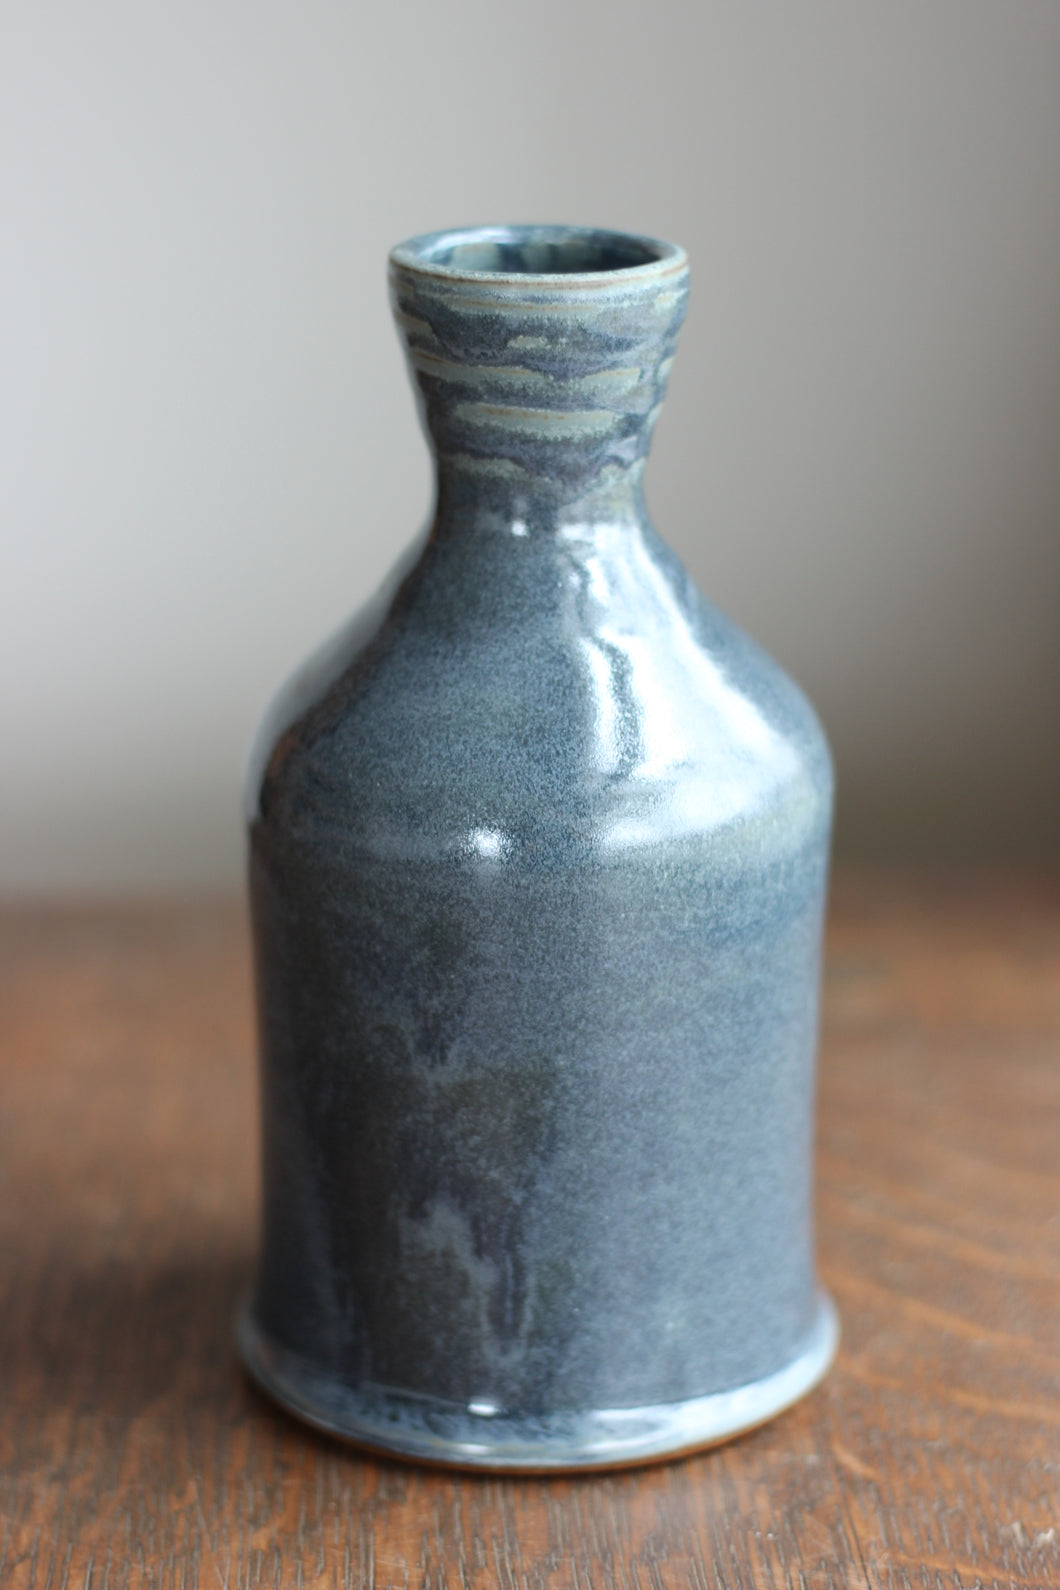 Bottle Vase in Wellhouse Blue